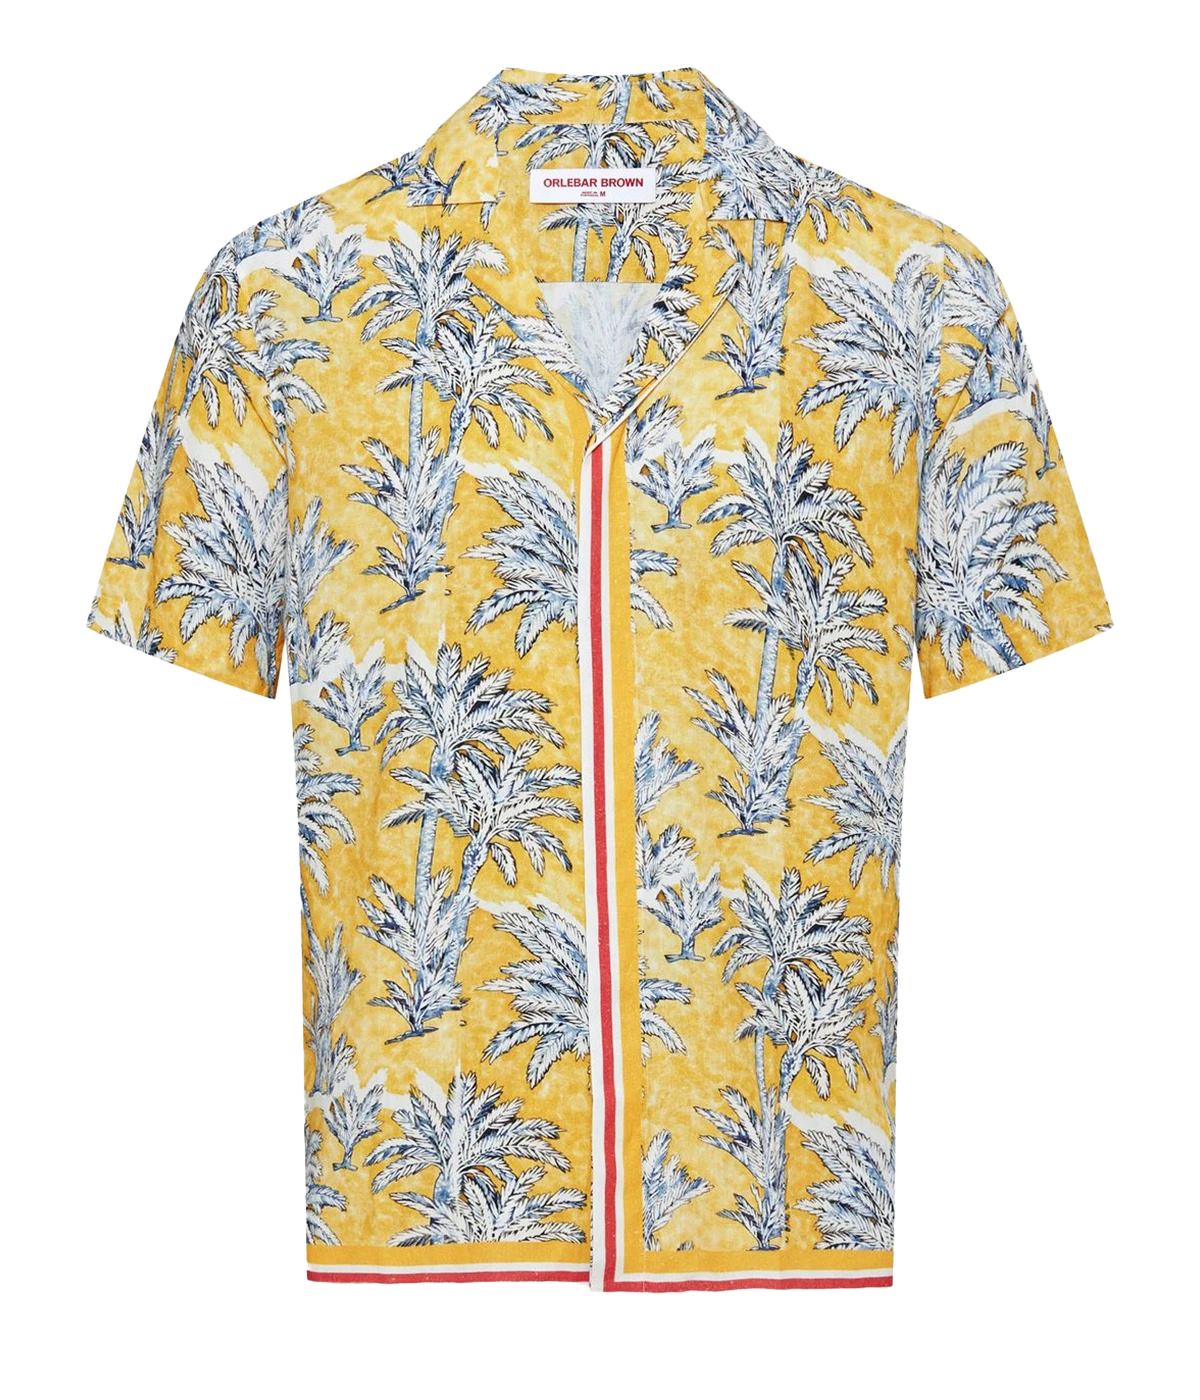 Maitan Short Sleeve Shirt in Toucan Palm